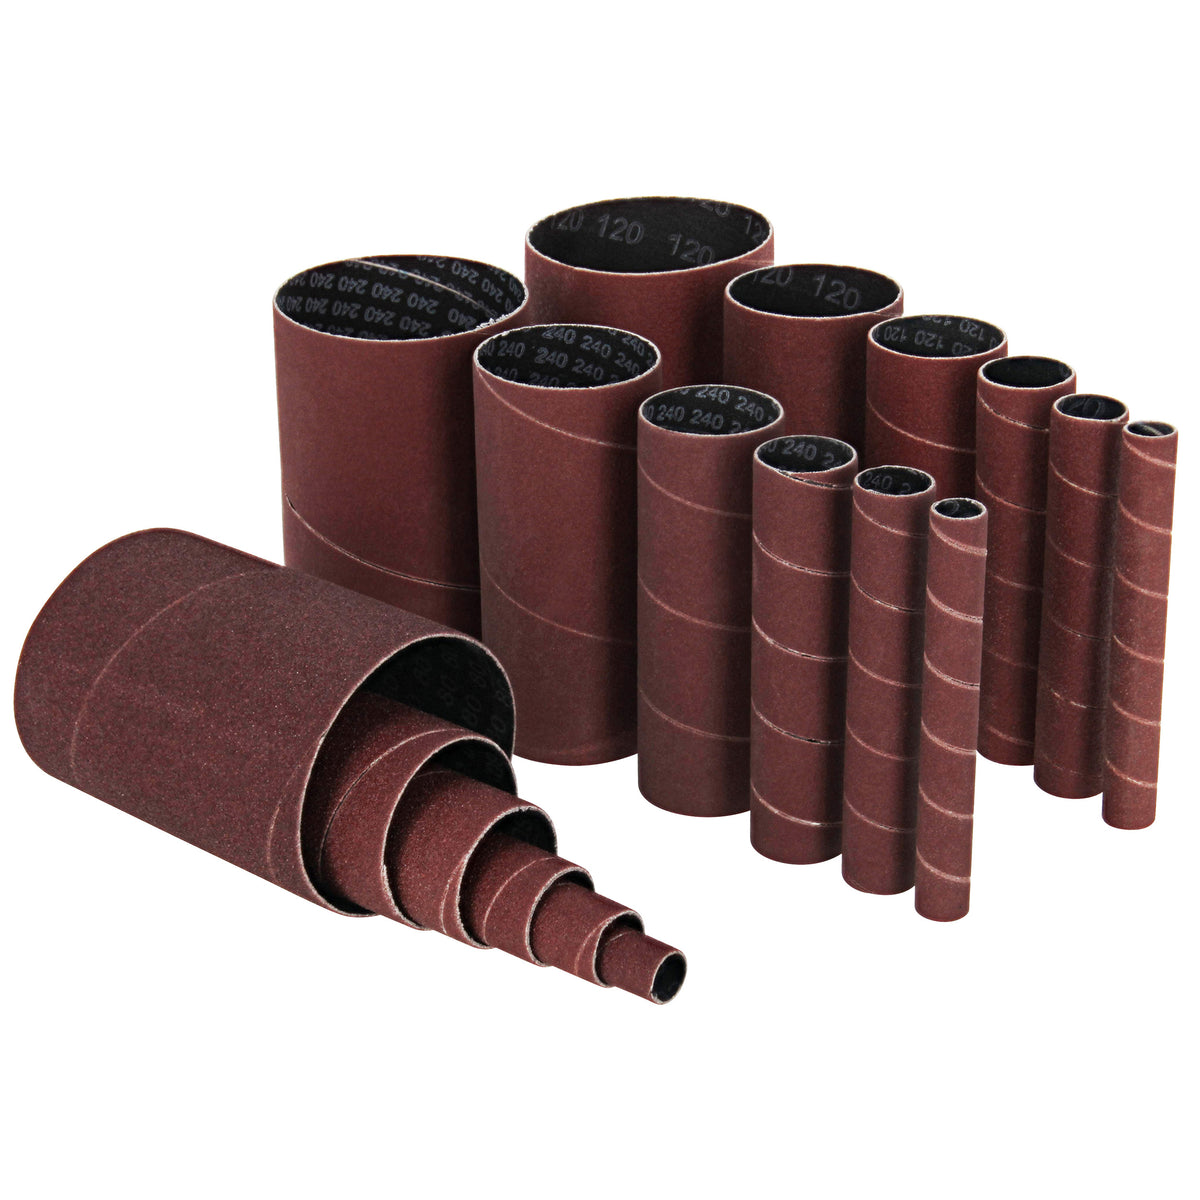 Aluminum Oxide Wood Sanding Sleeves 18-Pack 4.5” Inch Long Sandpaper